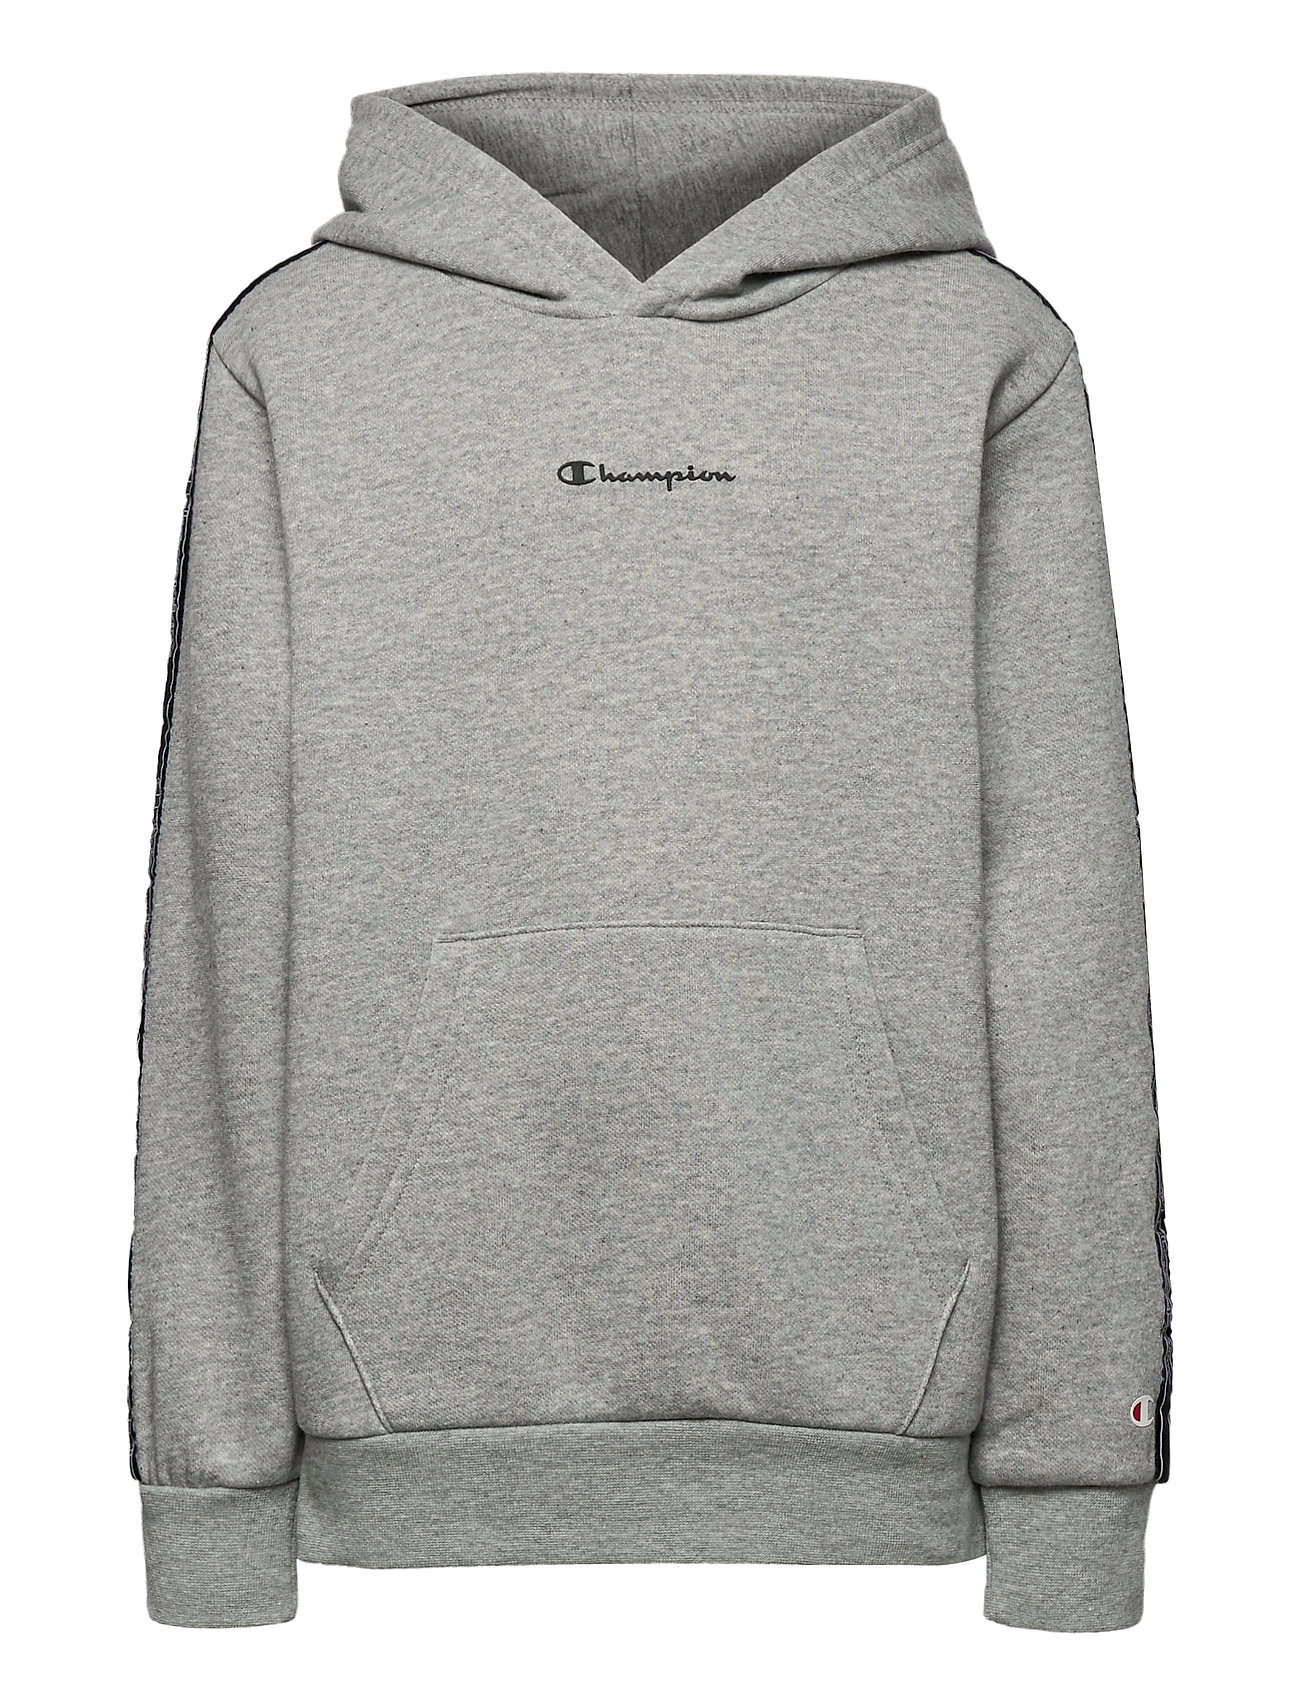 Champion hoodies – Hooded Sweatshirt Hoodie Trøje Champion til i Sort - Pashion.dk